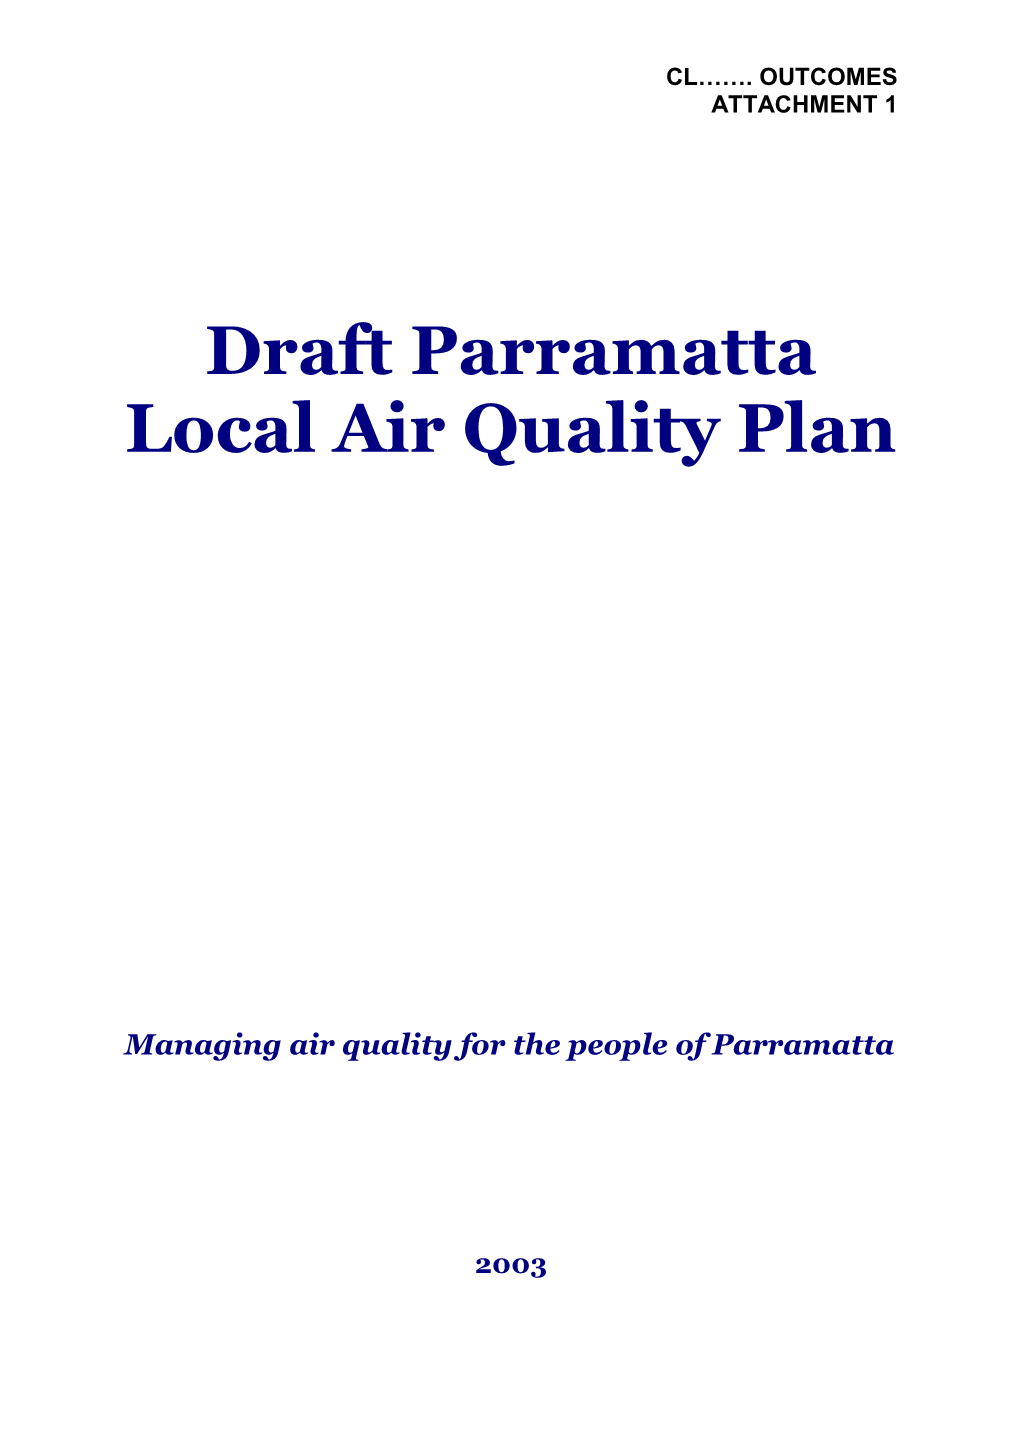 Draft Parramatta Local Air Quality Management Plan